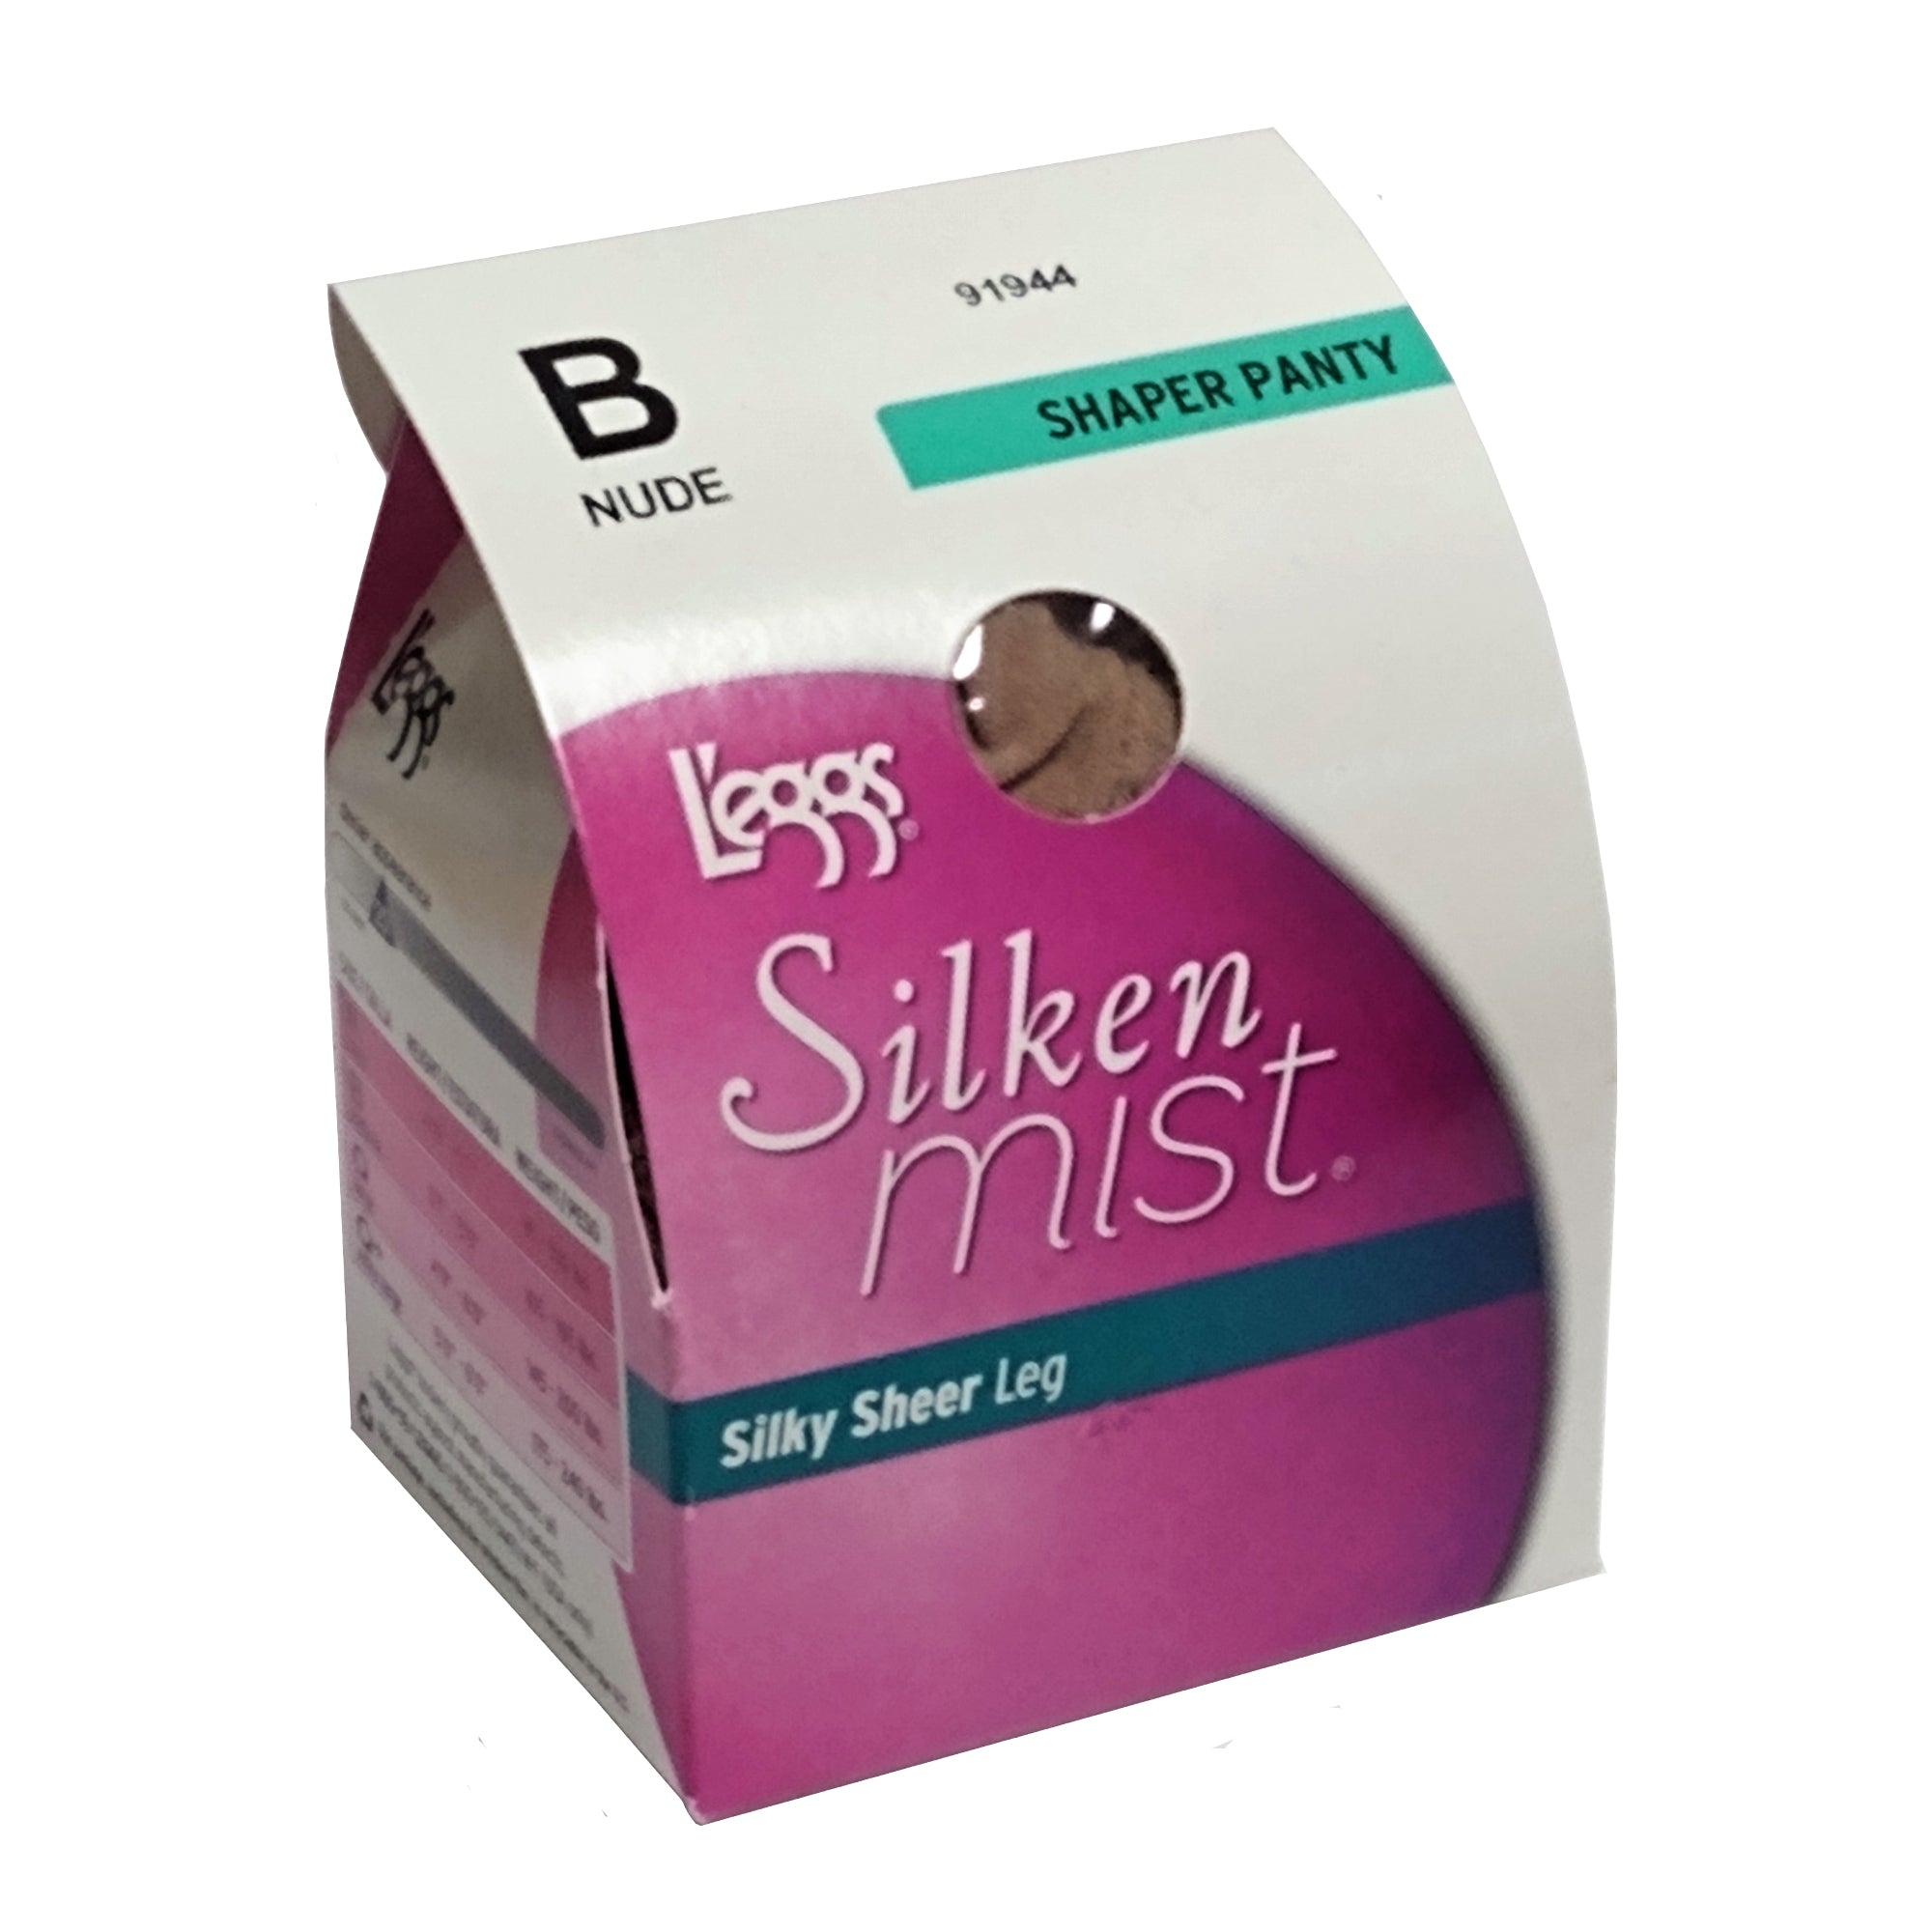 Leggs Silken Mist Shaper Panty B, 1 Pack, 1 Pair, By Hanesbrands Inc.